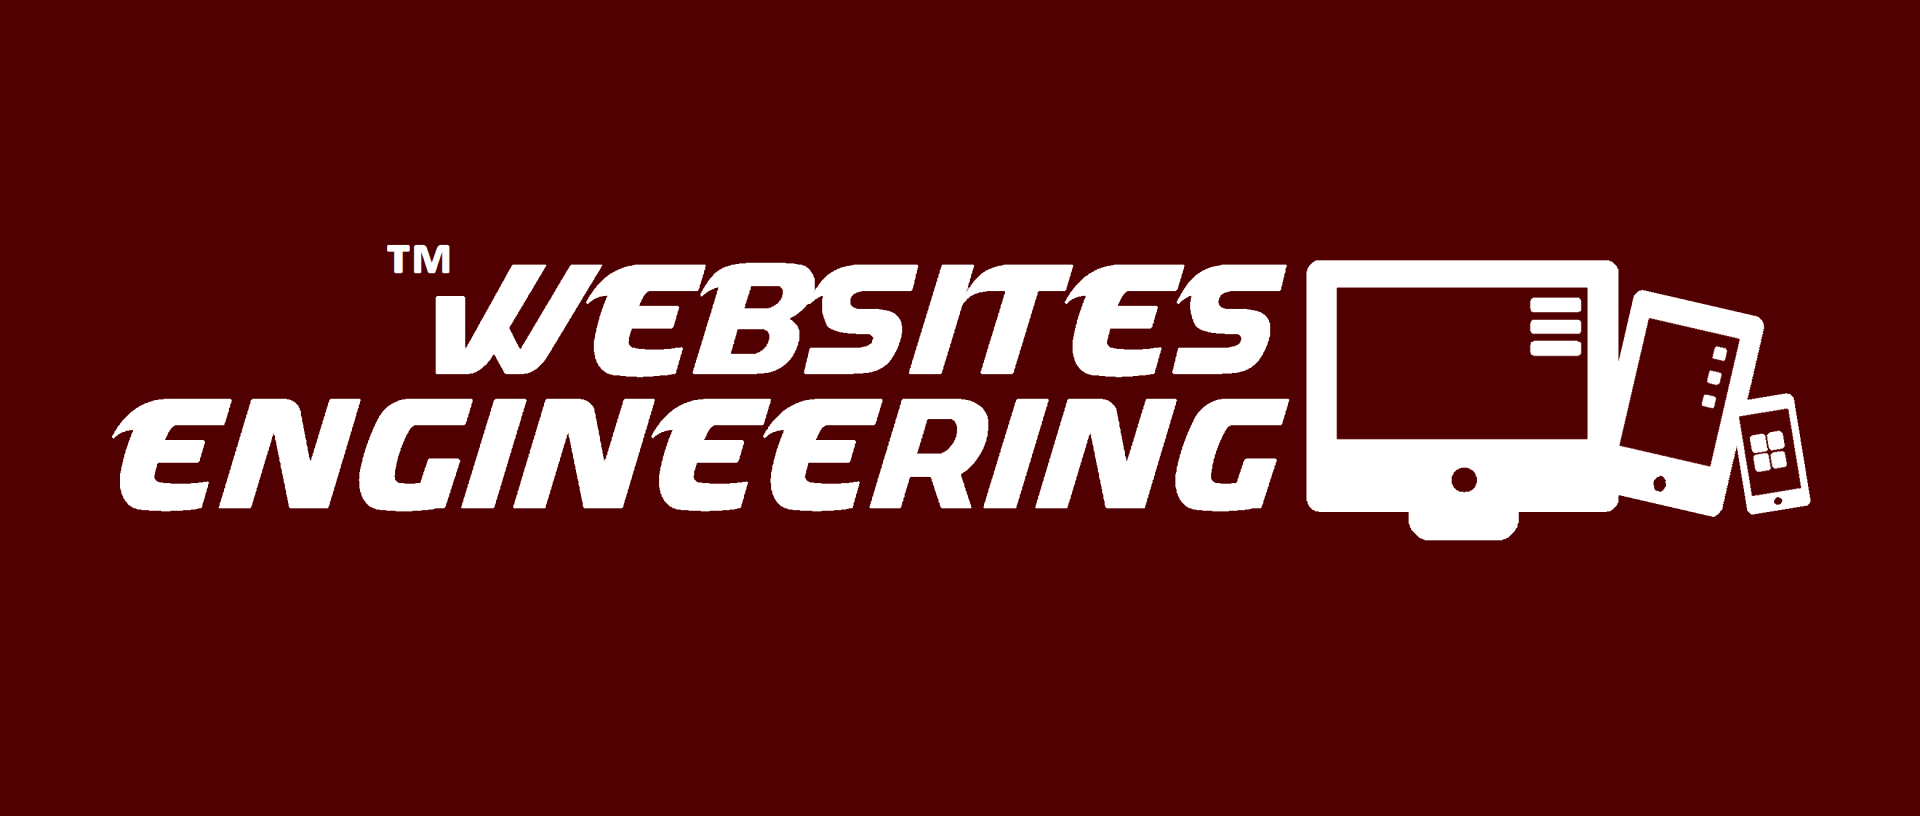 Websites Engineering Logo